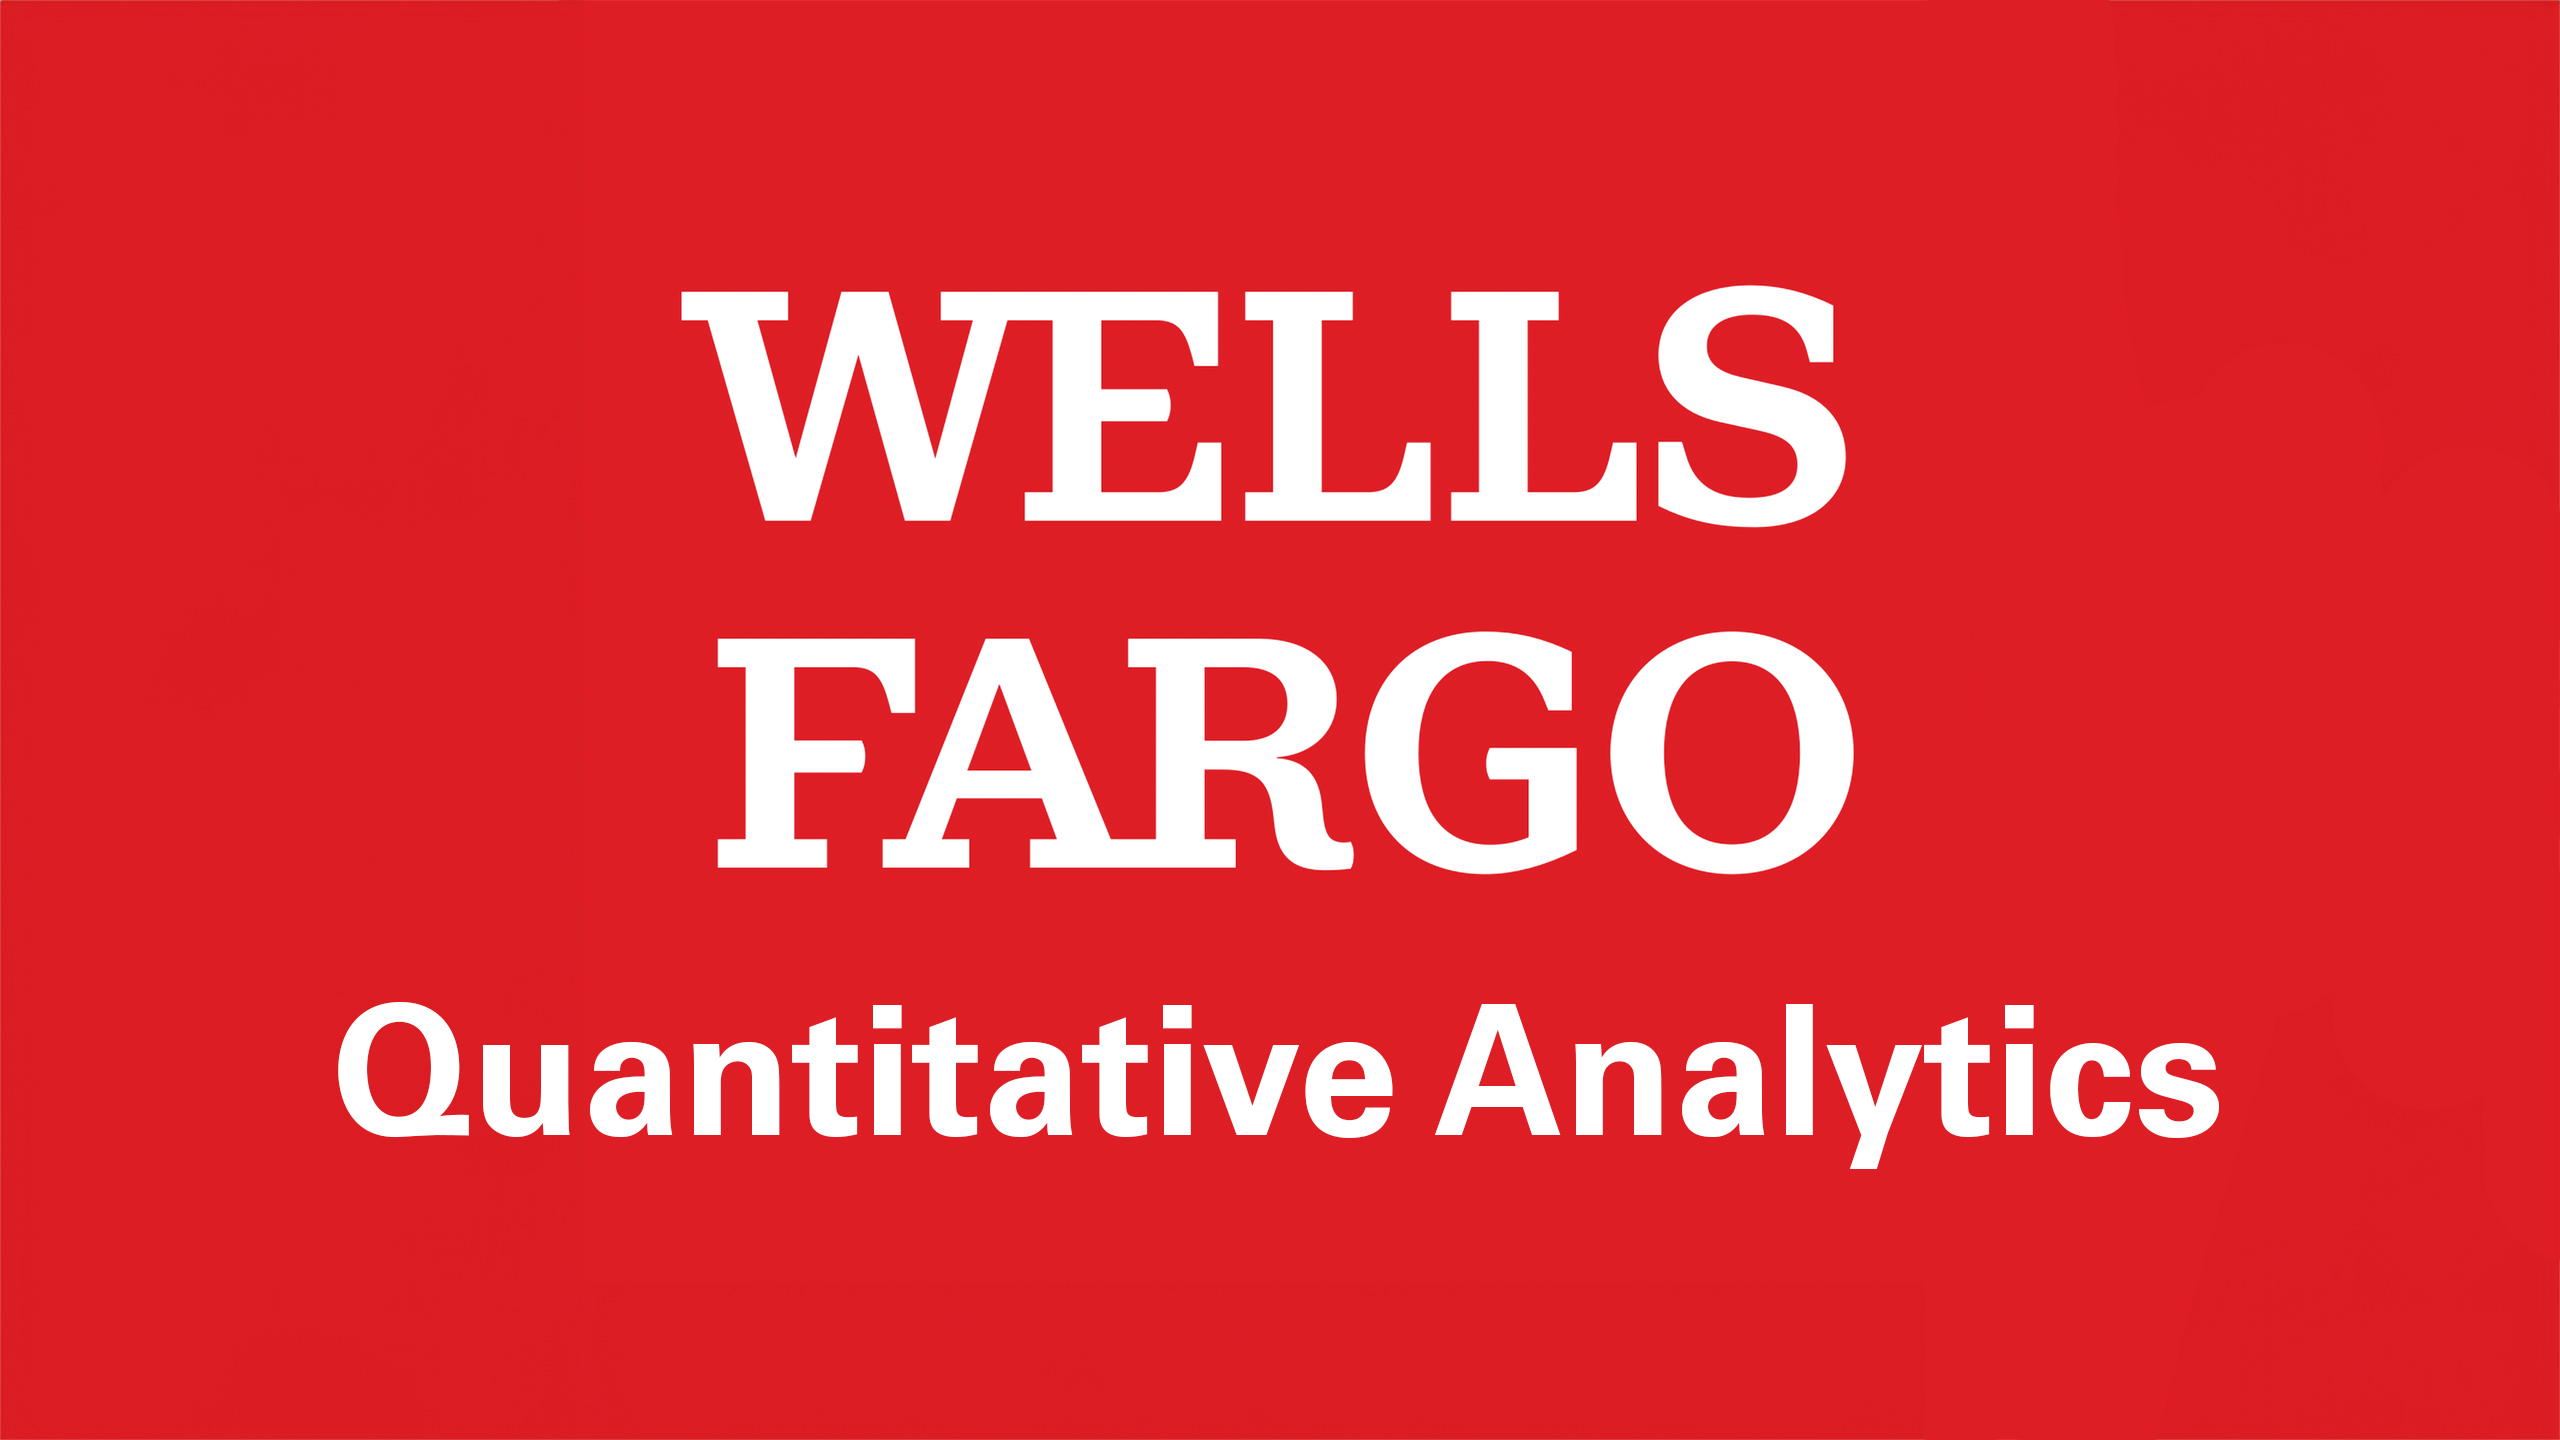 The Wells Fargo logo with the words quantitative analytics underneath it